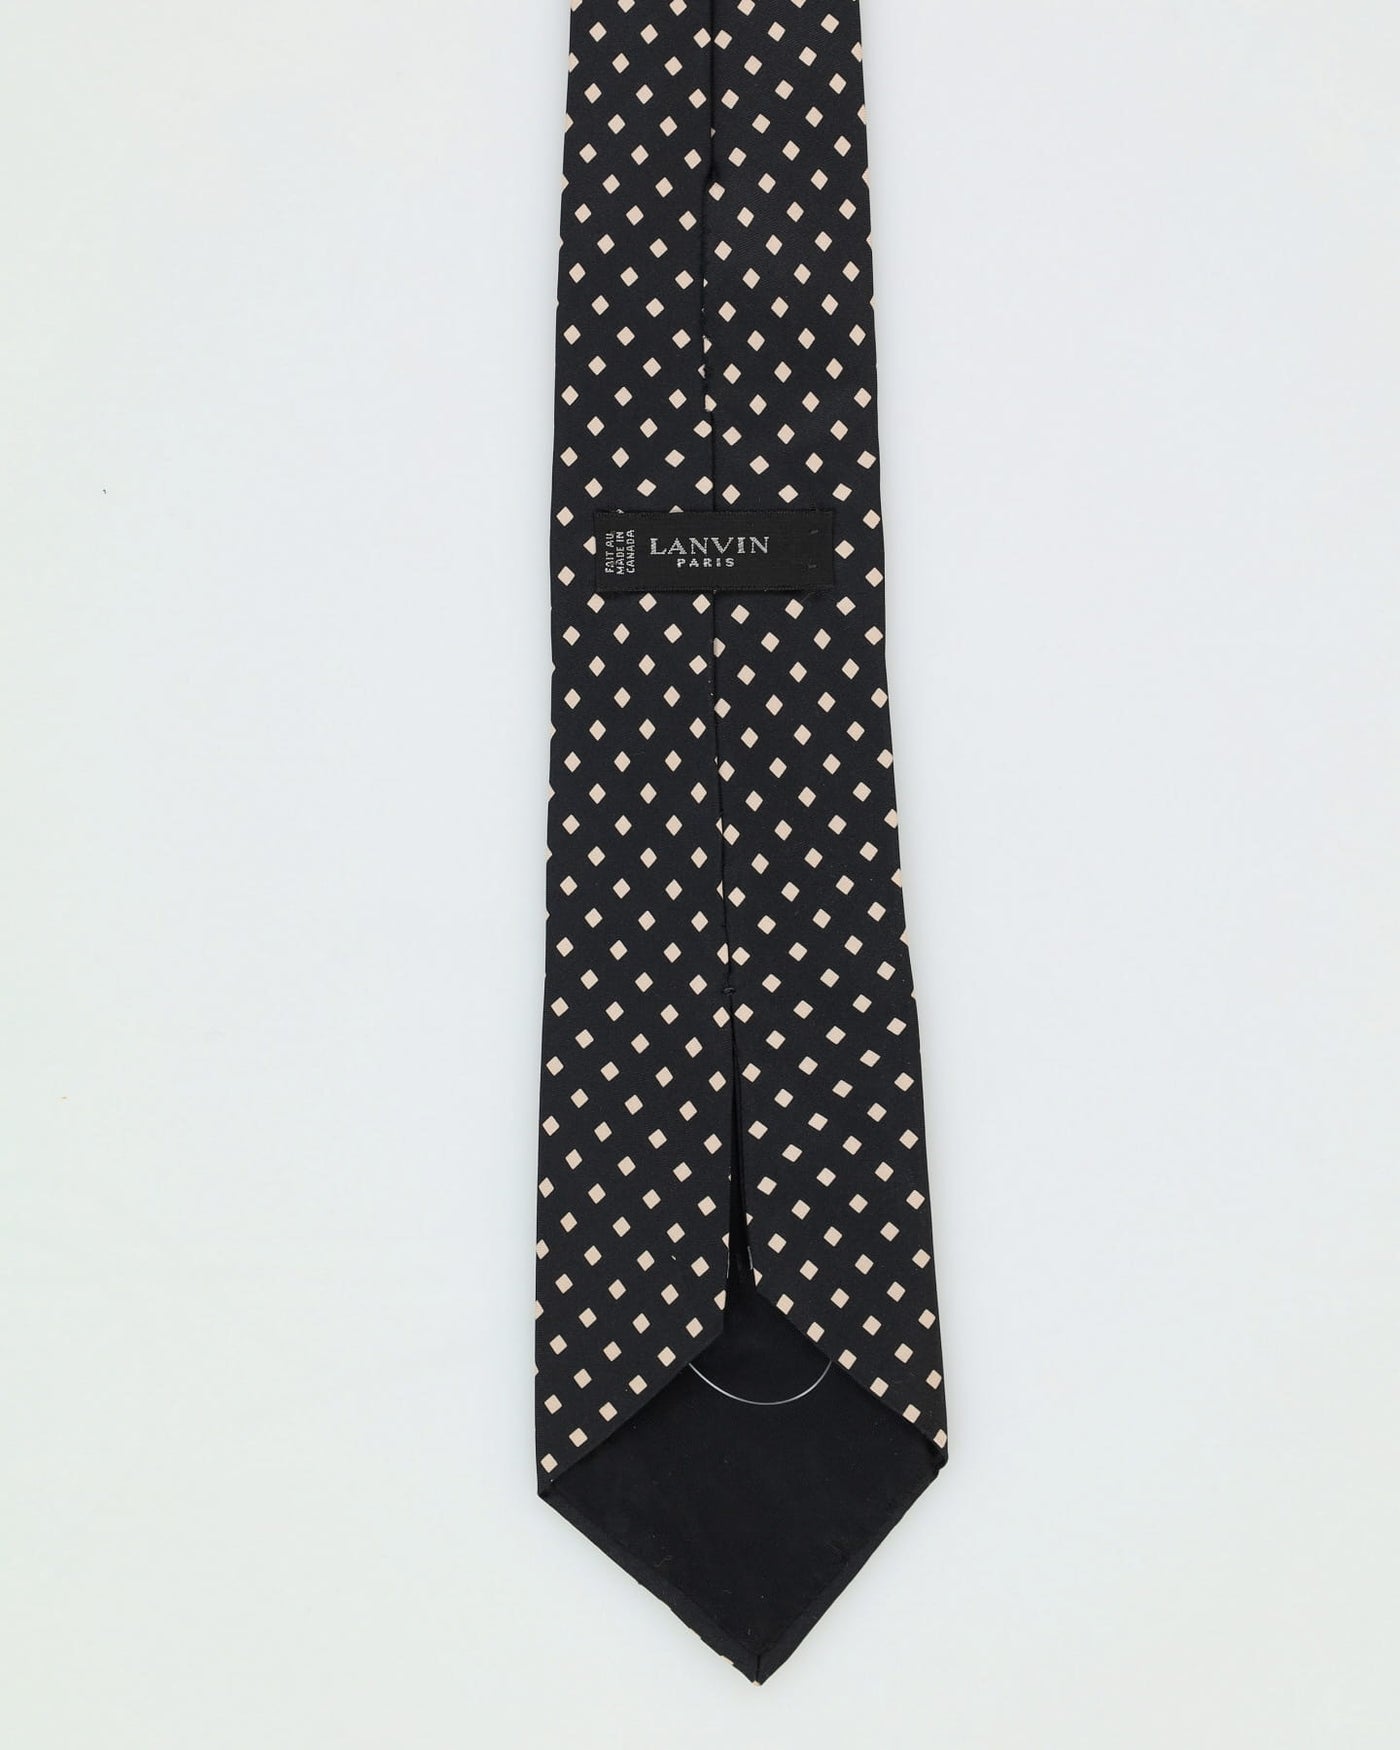 Vintage Lanvin Black & White Patterned Tie